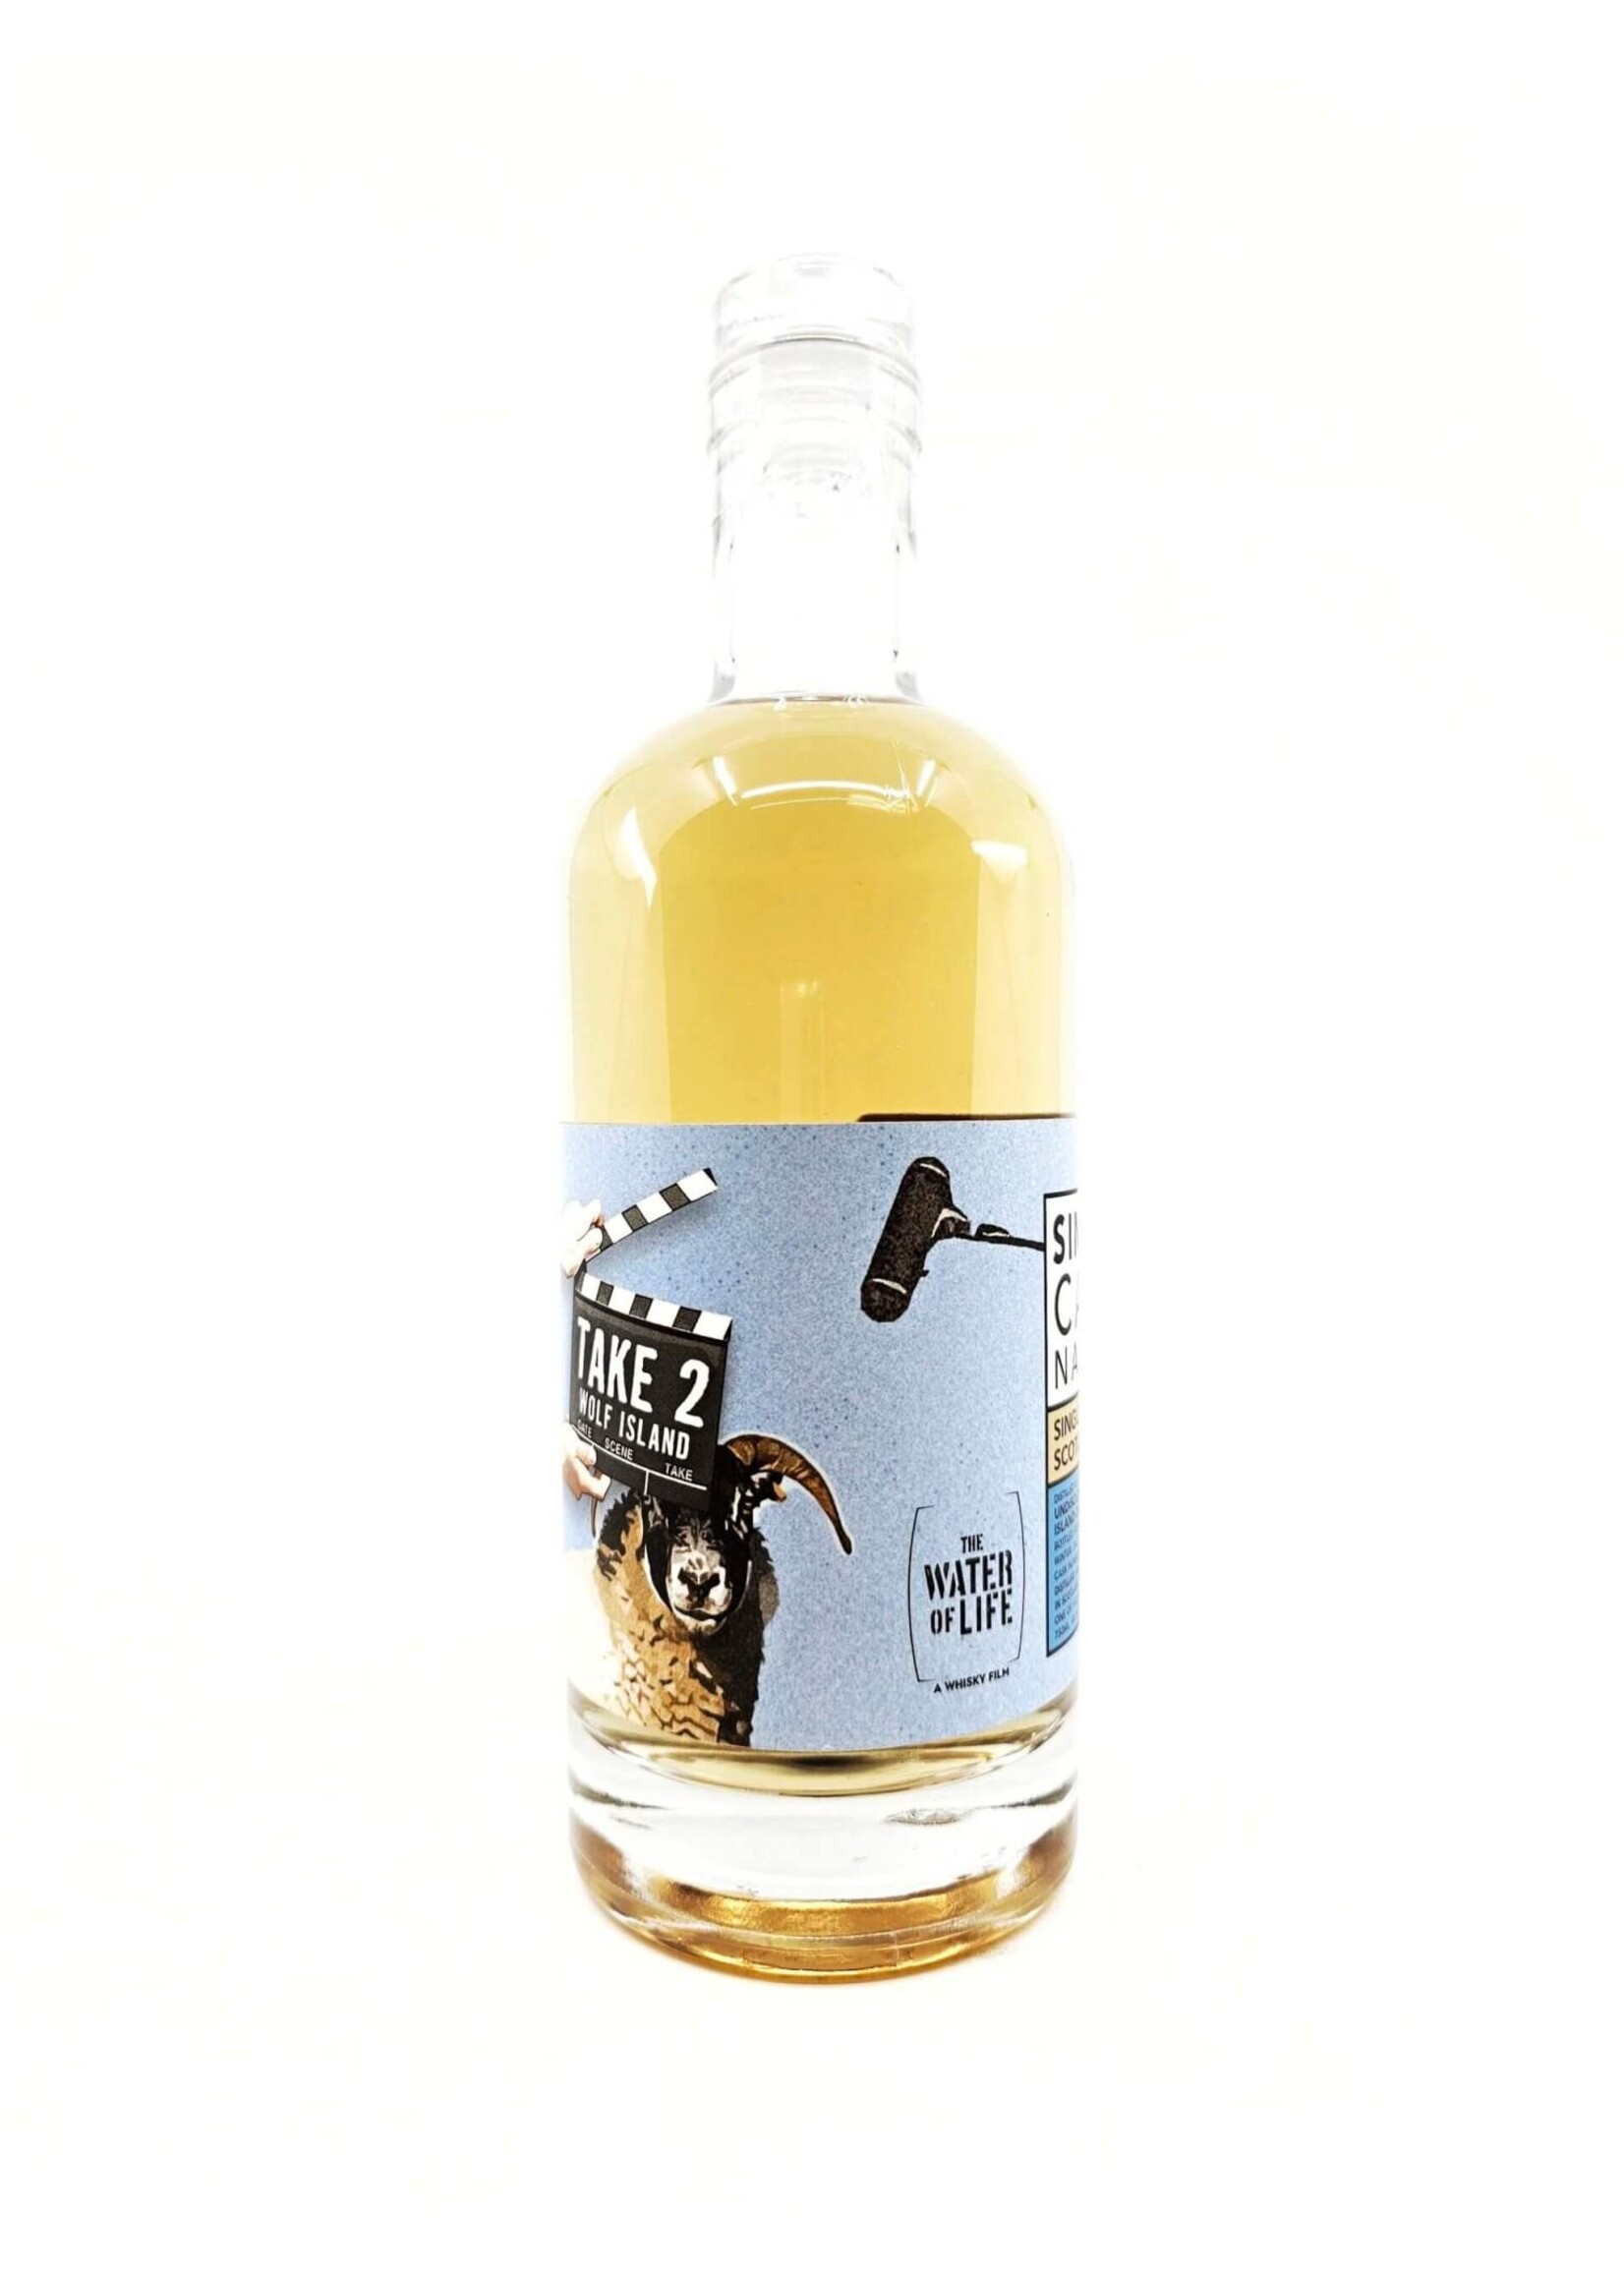 Single Cask Nation Single Cask Nation / “W.O.L.F. Island” Undisclosed Island Distillery Take 2 Single Malt Scotch Whisky 48.8%abv / 750mL